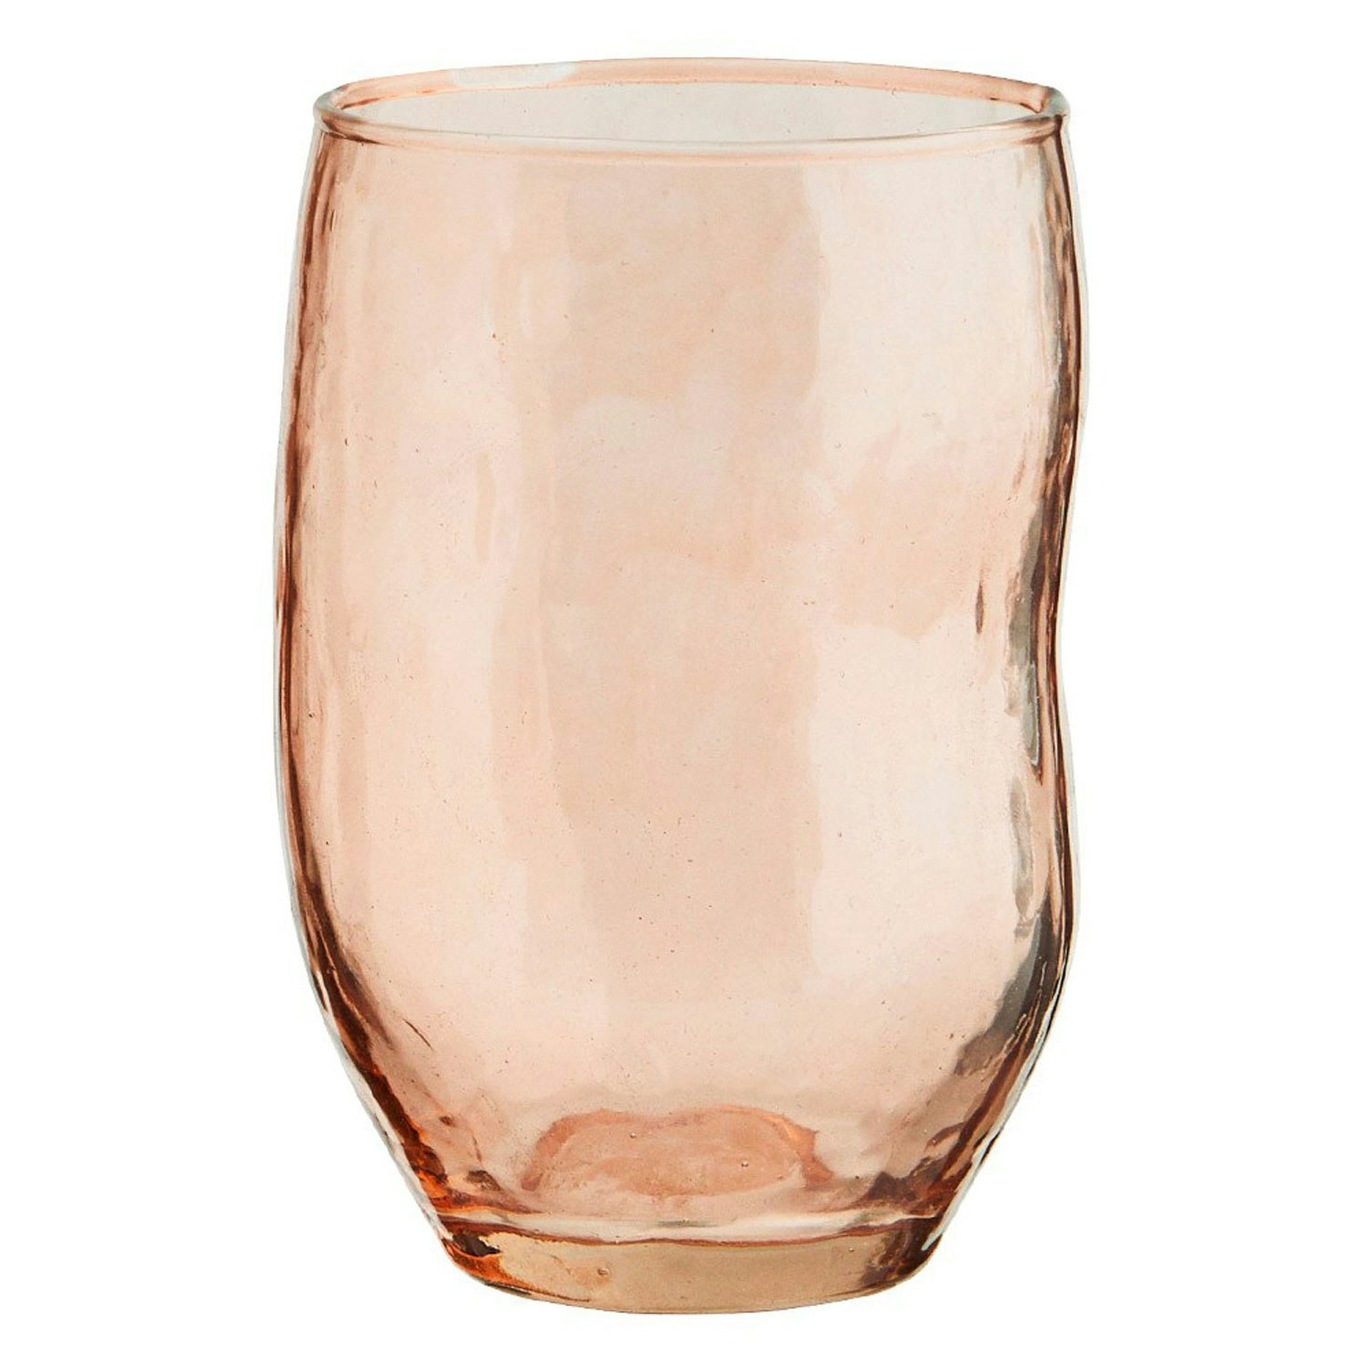 https://royaldesign.com/image/2/madam-stoltz-hammered-drinking-glass-30-cl-1?w=800&quality=80